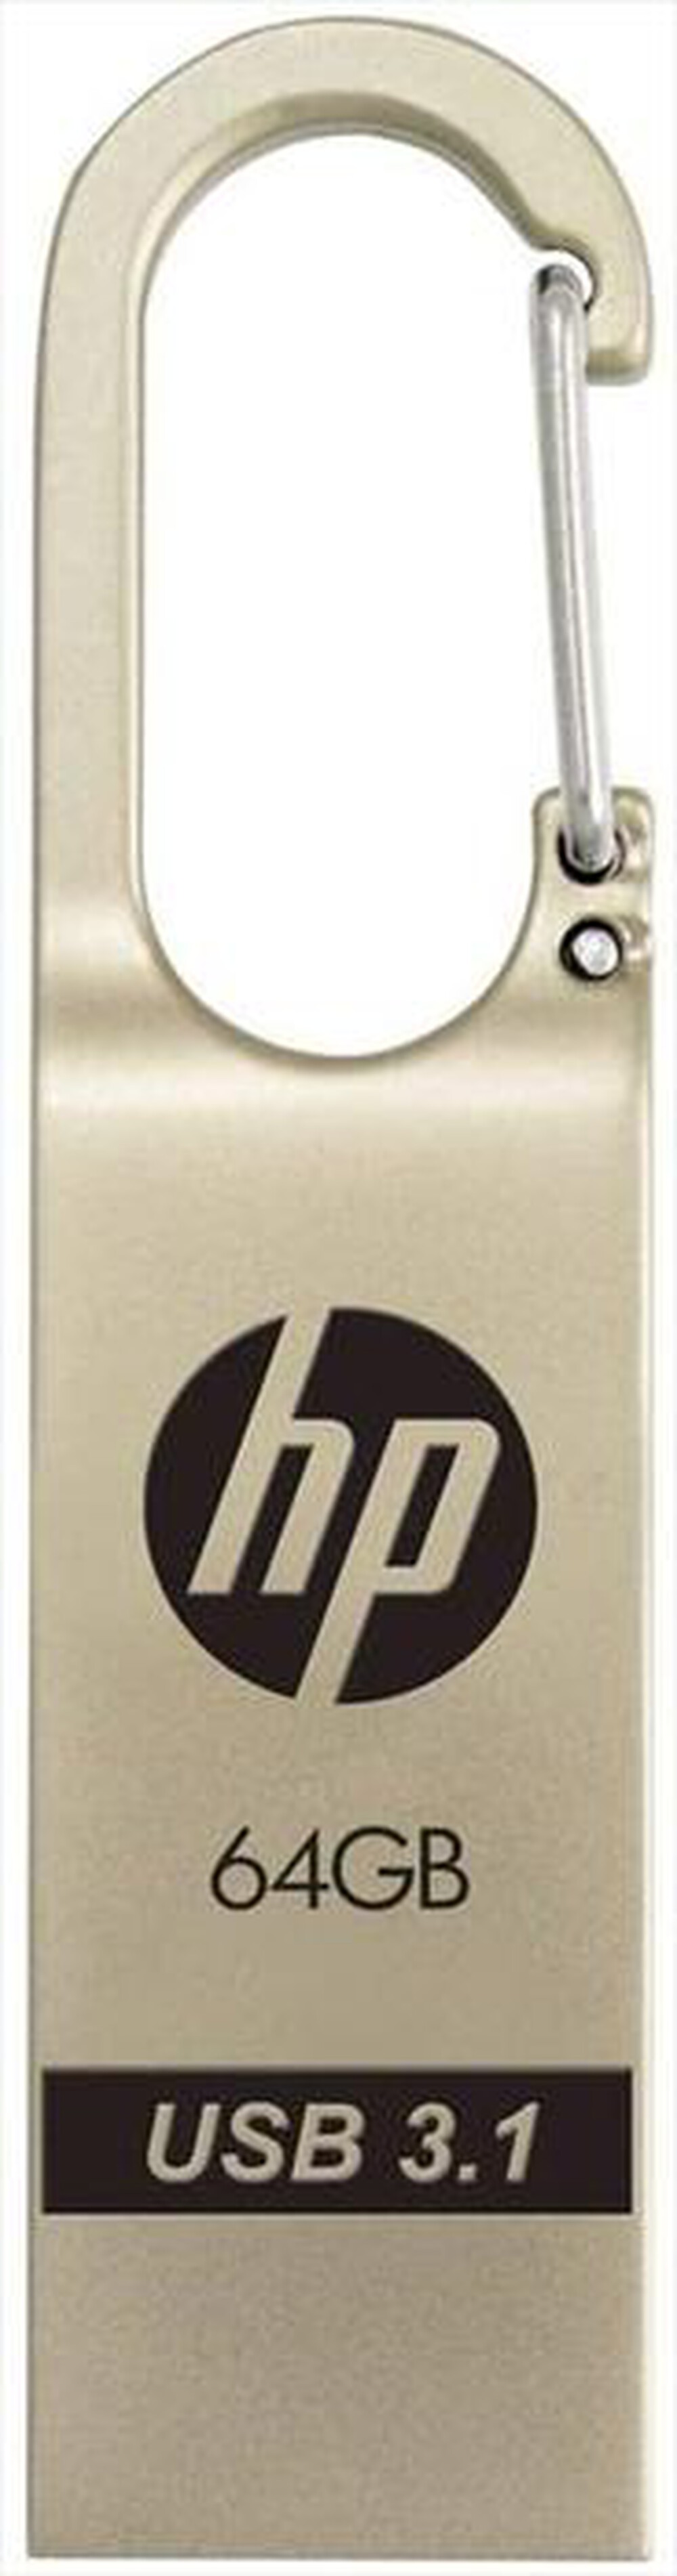 "HP - IPNHPPHPFD760L"